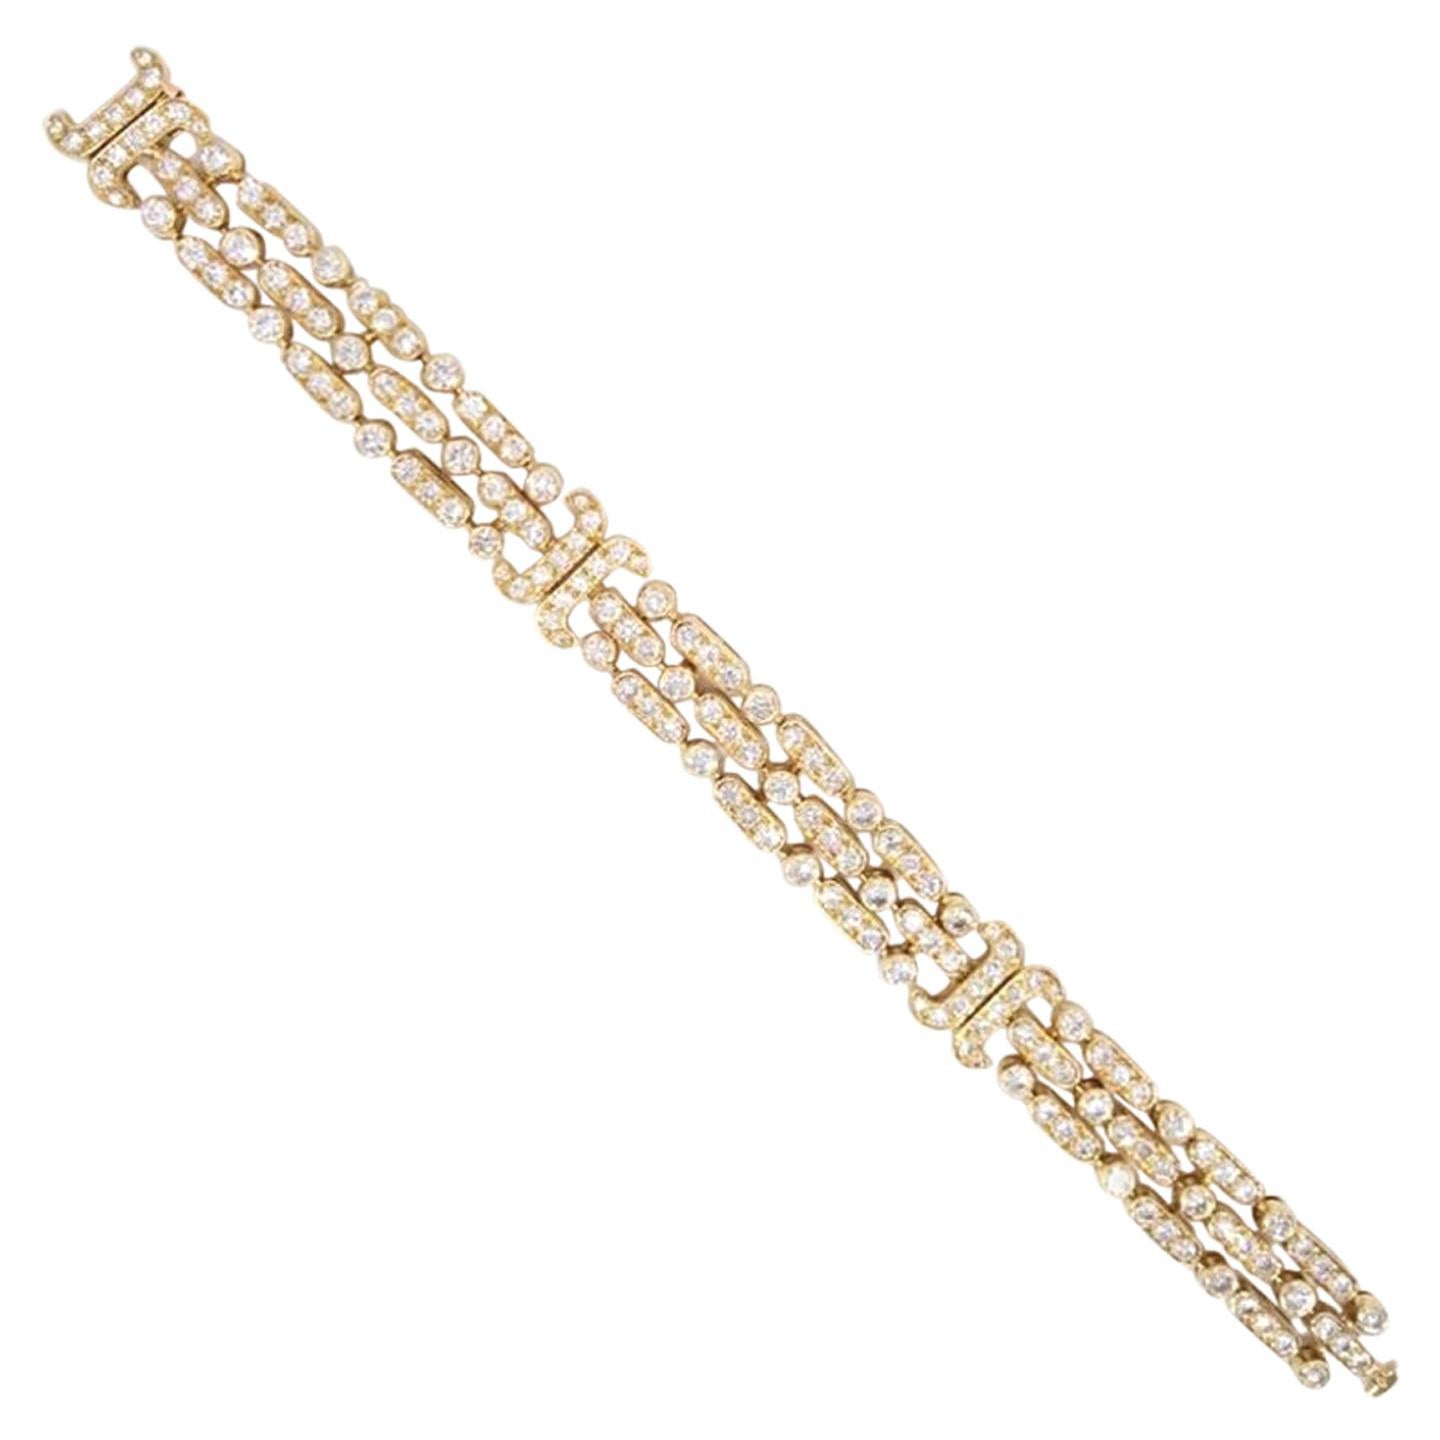 Van Cleef & Arpels 18 Karat Gold and Diamond Bracelet, Signed and Numbered For Sale